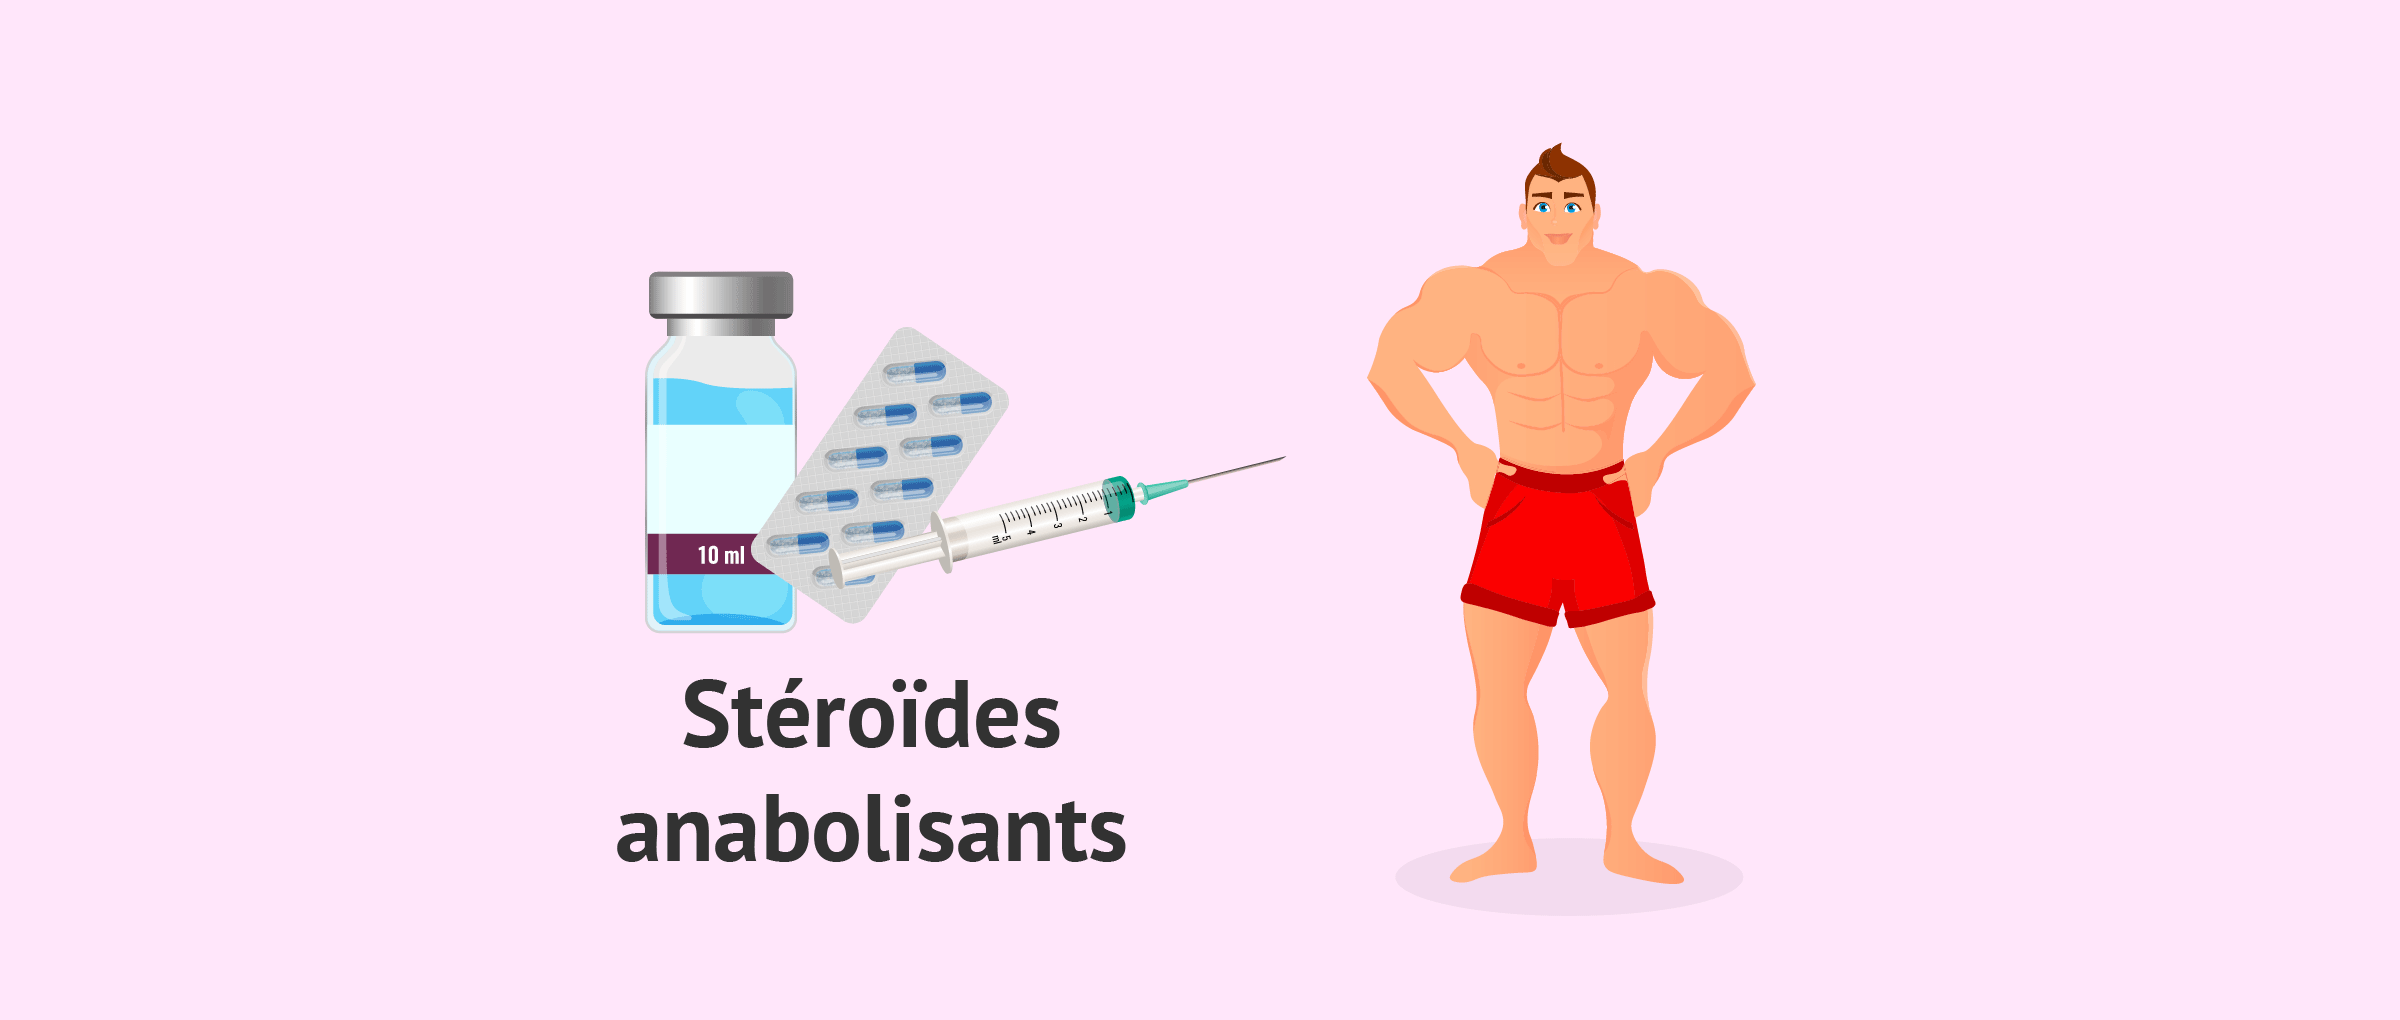 27 Ways To Improve tribulus steroide